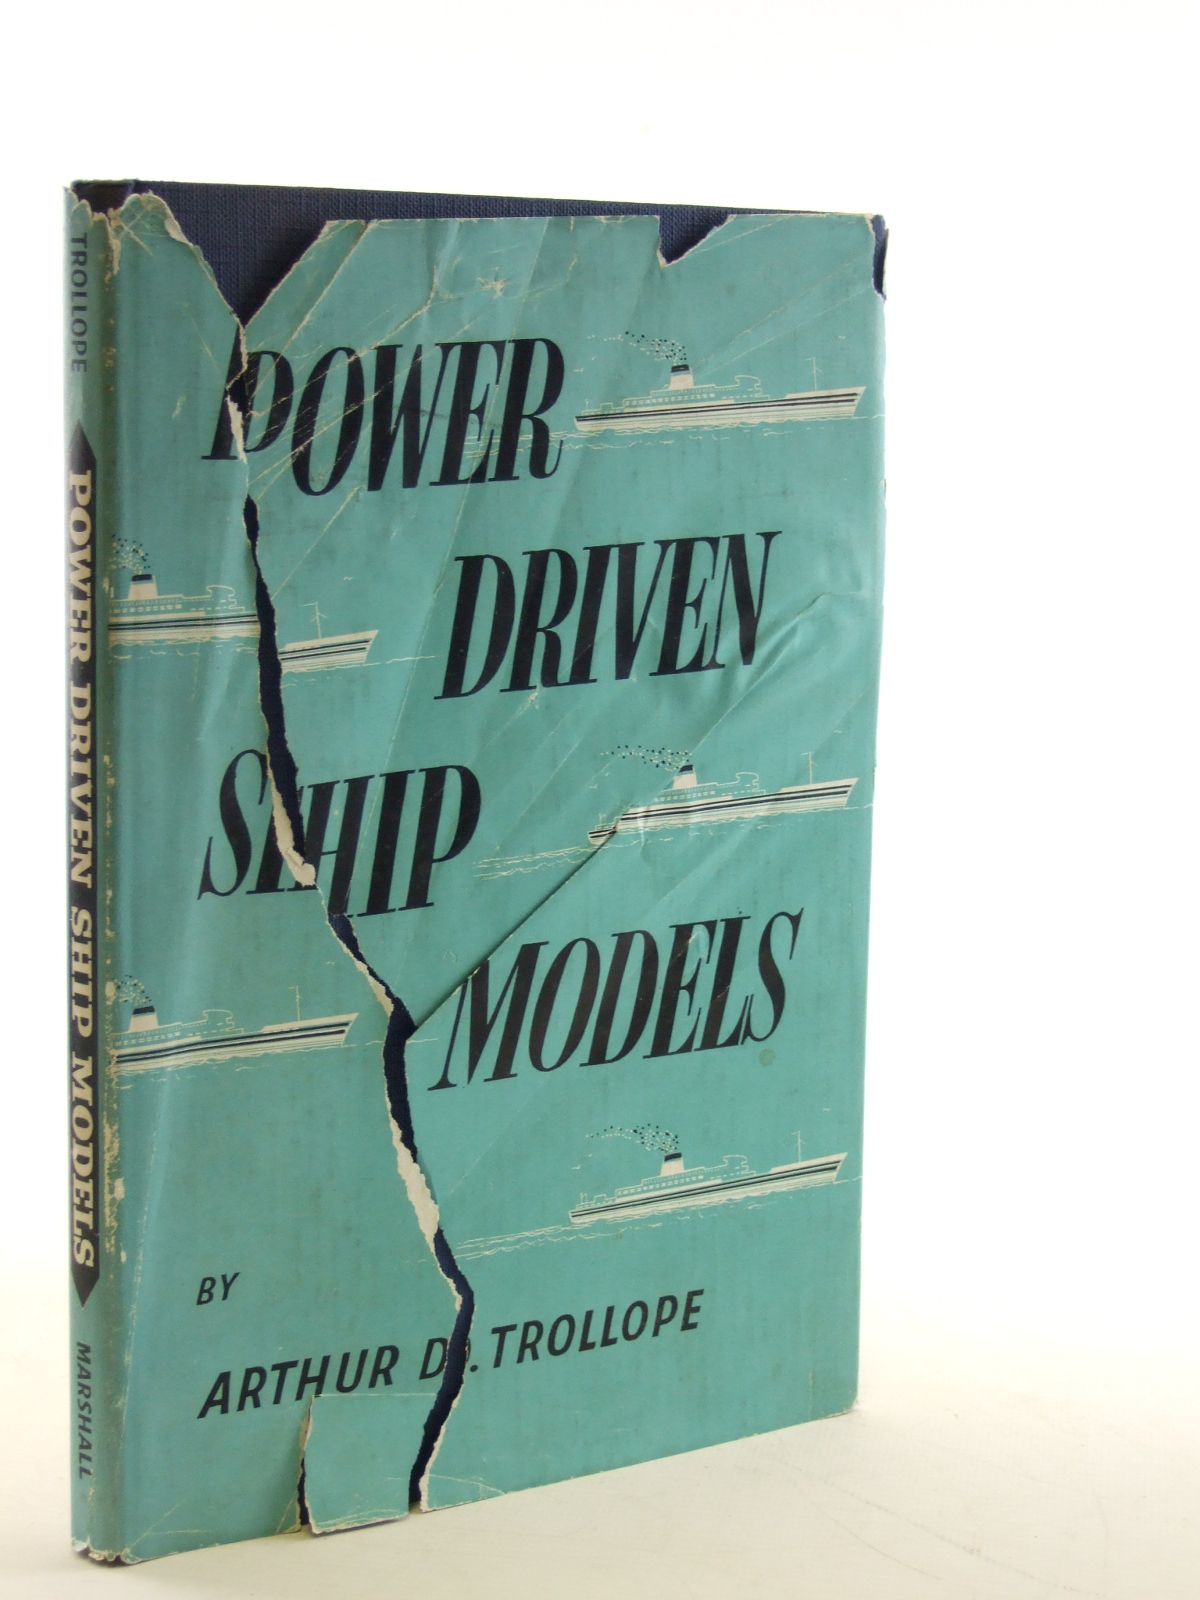 TROLLOPE, A.D. - Power Driven Ship Models